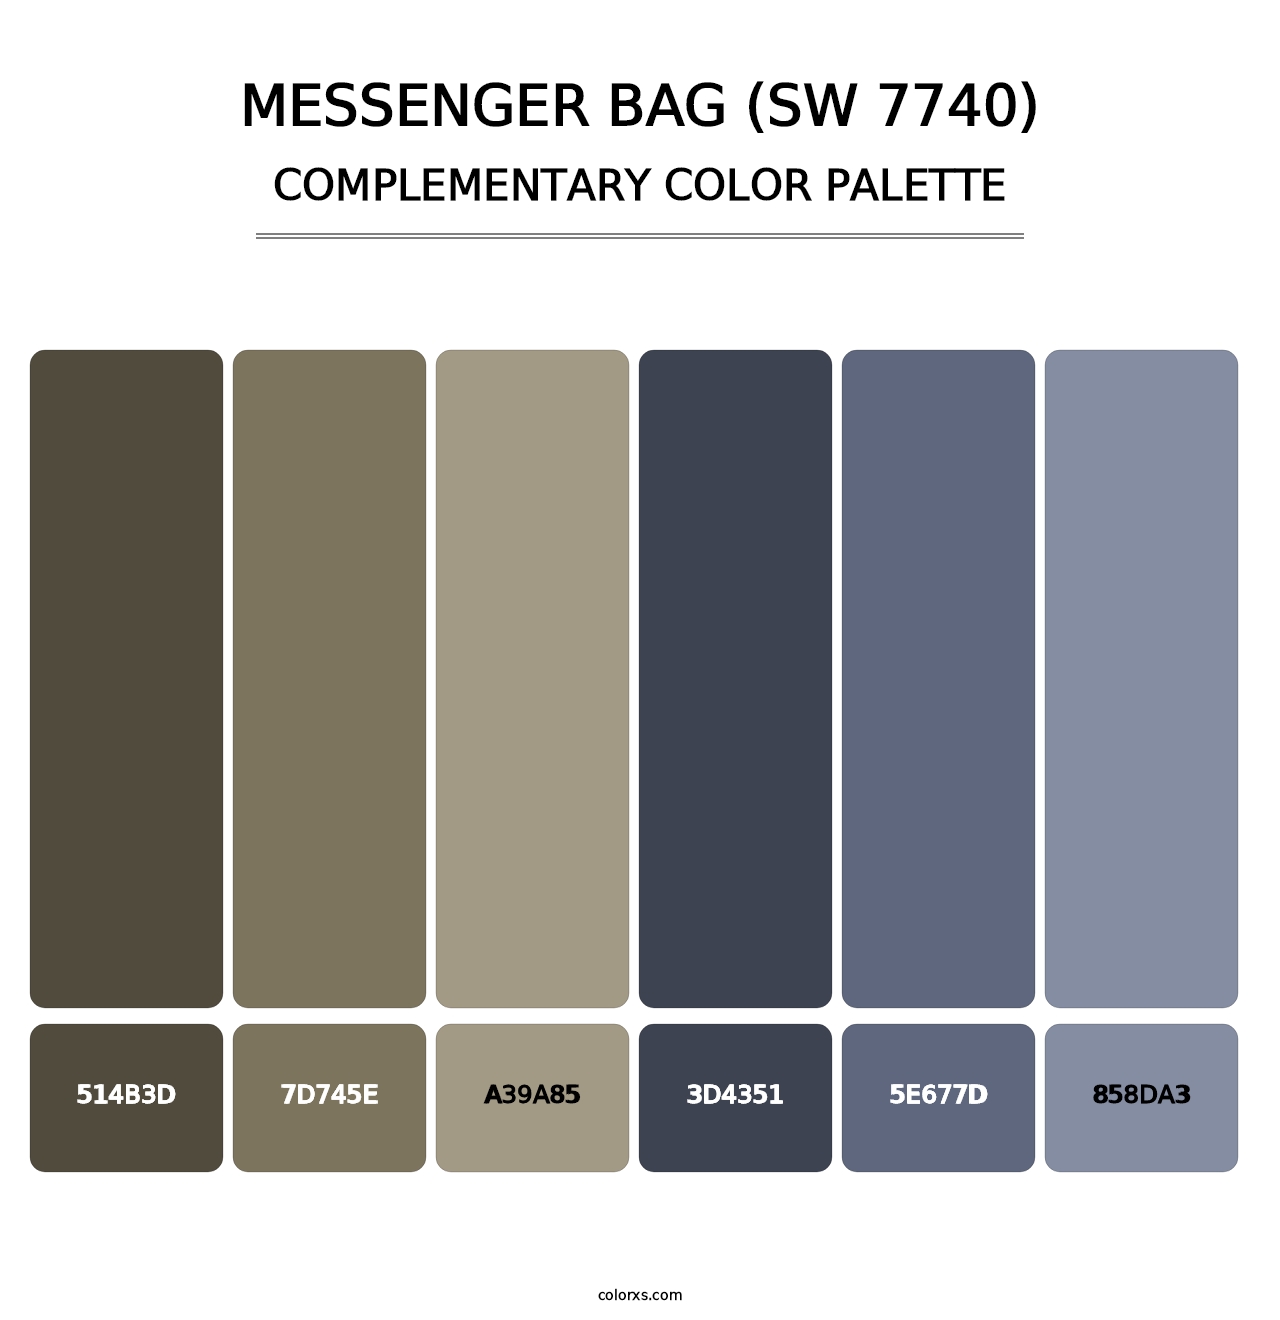 Messenger Bag (SW 7740) - Complementary Color Palette